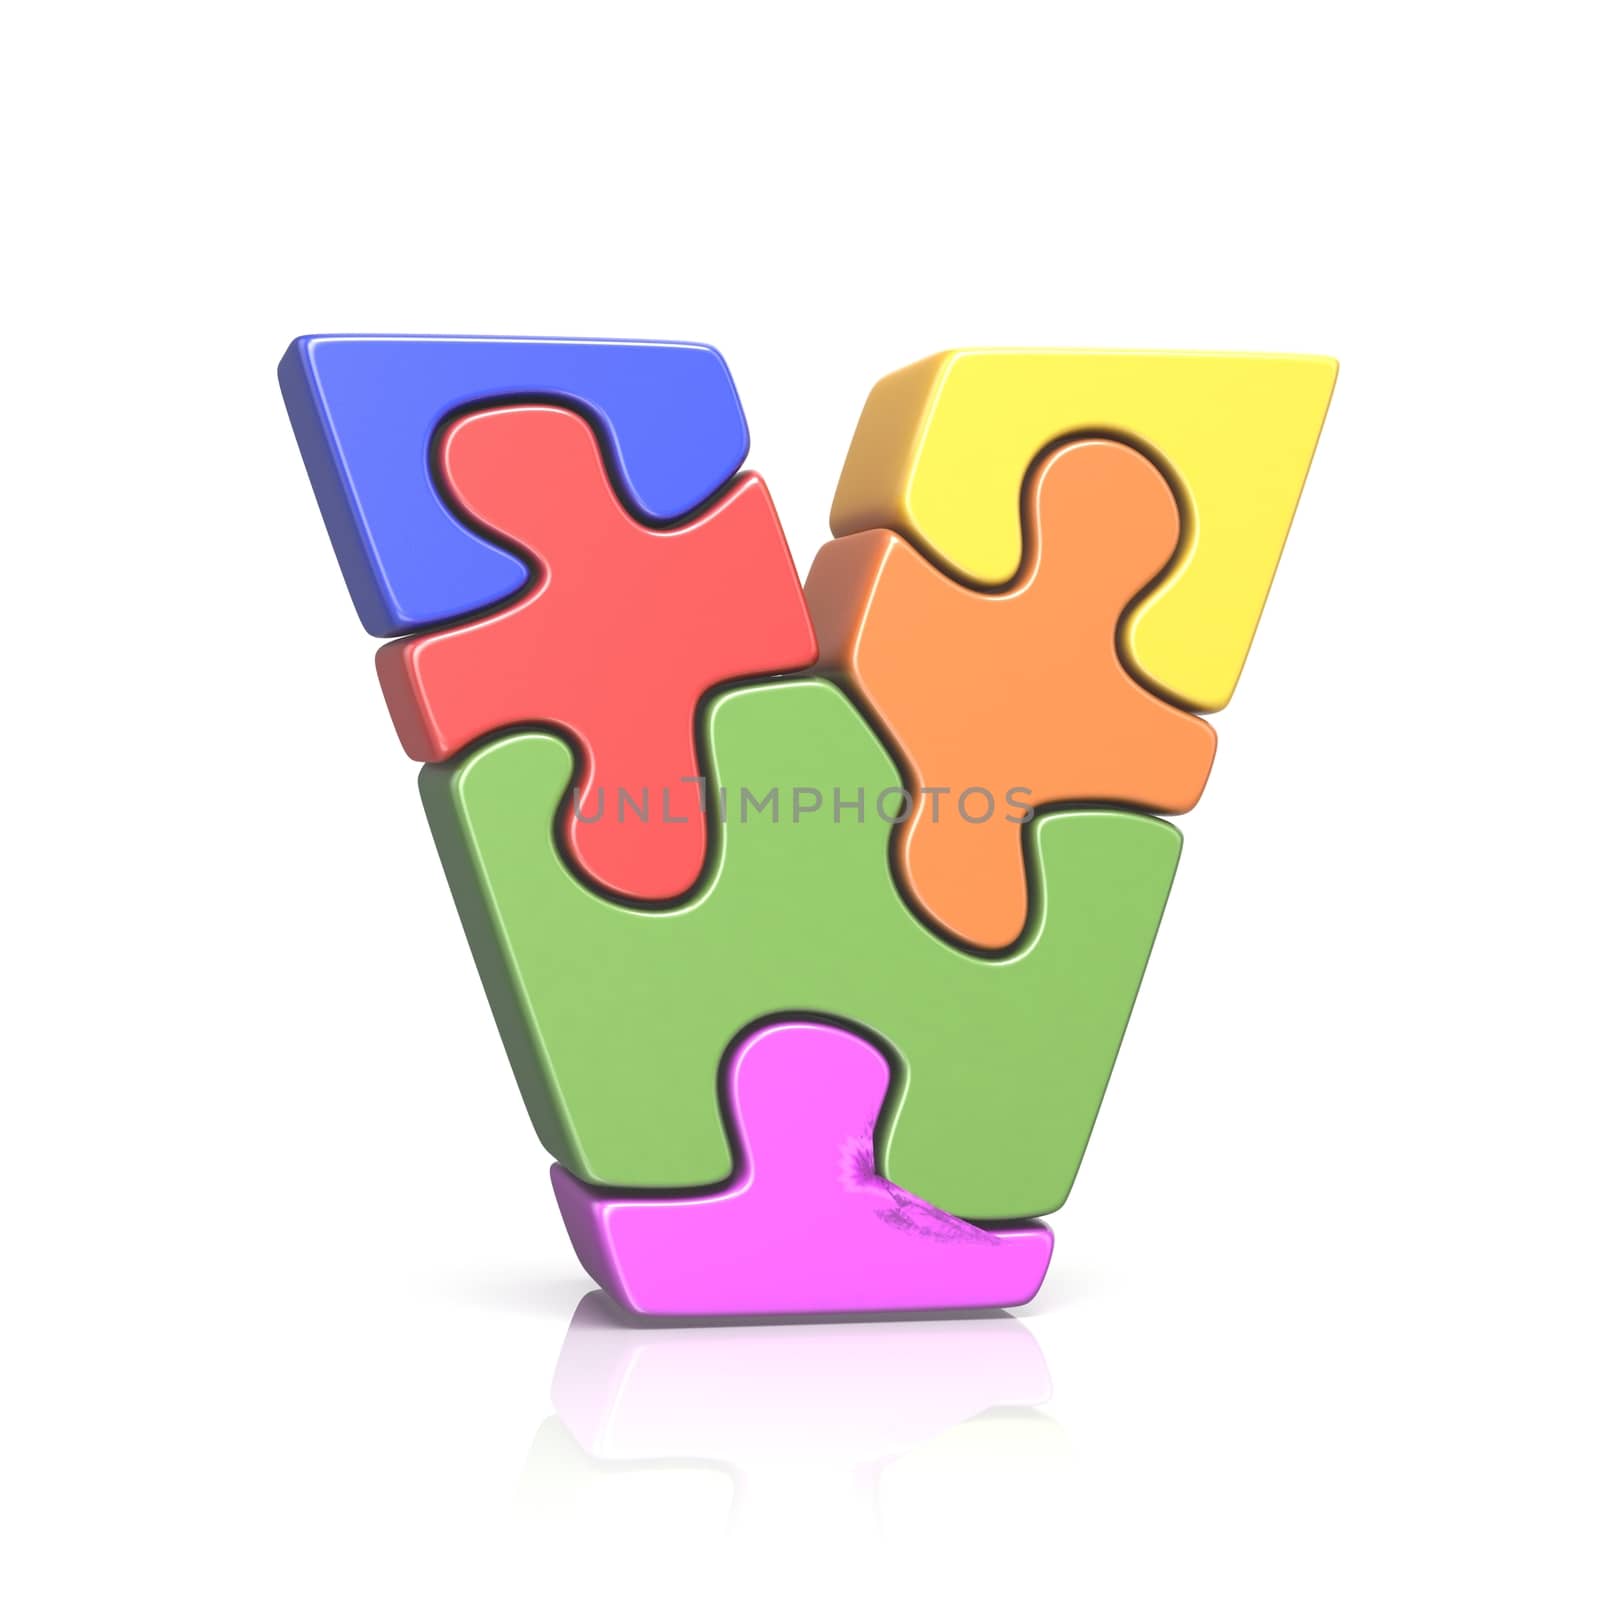 Puzzle jigsaw letter V 3D render illustration isolated on white background